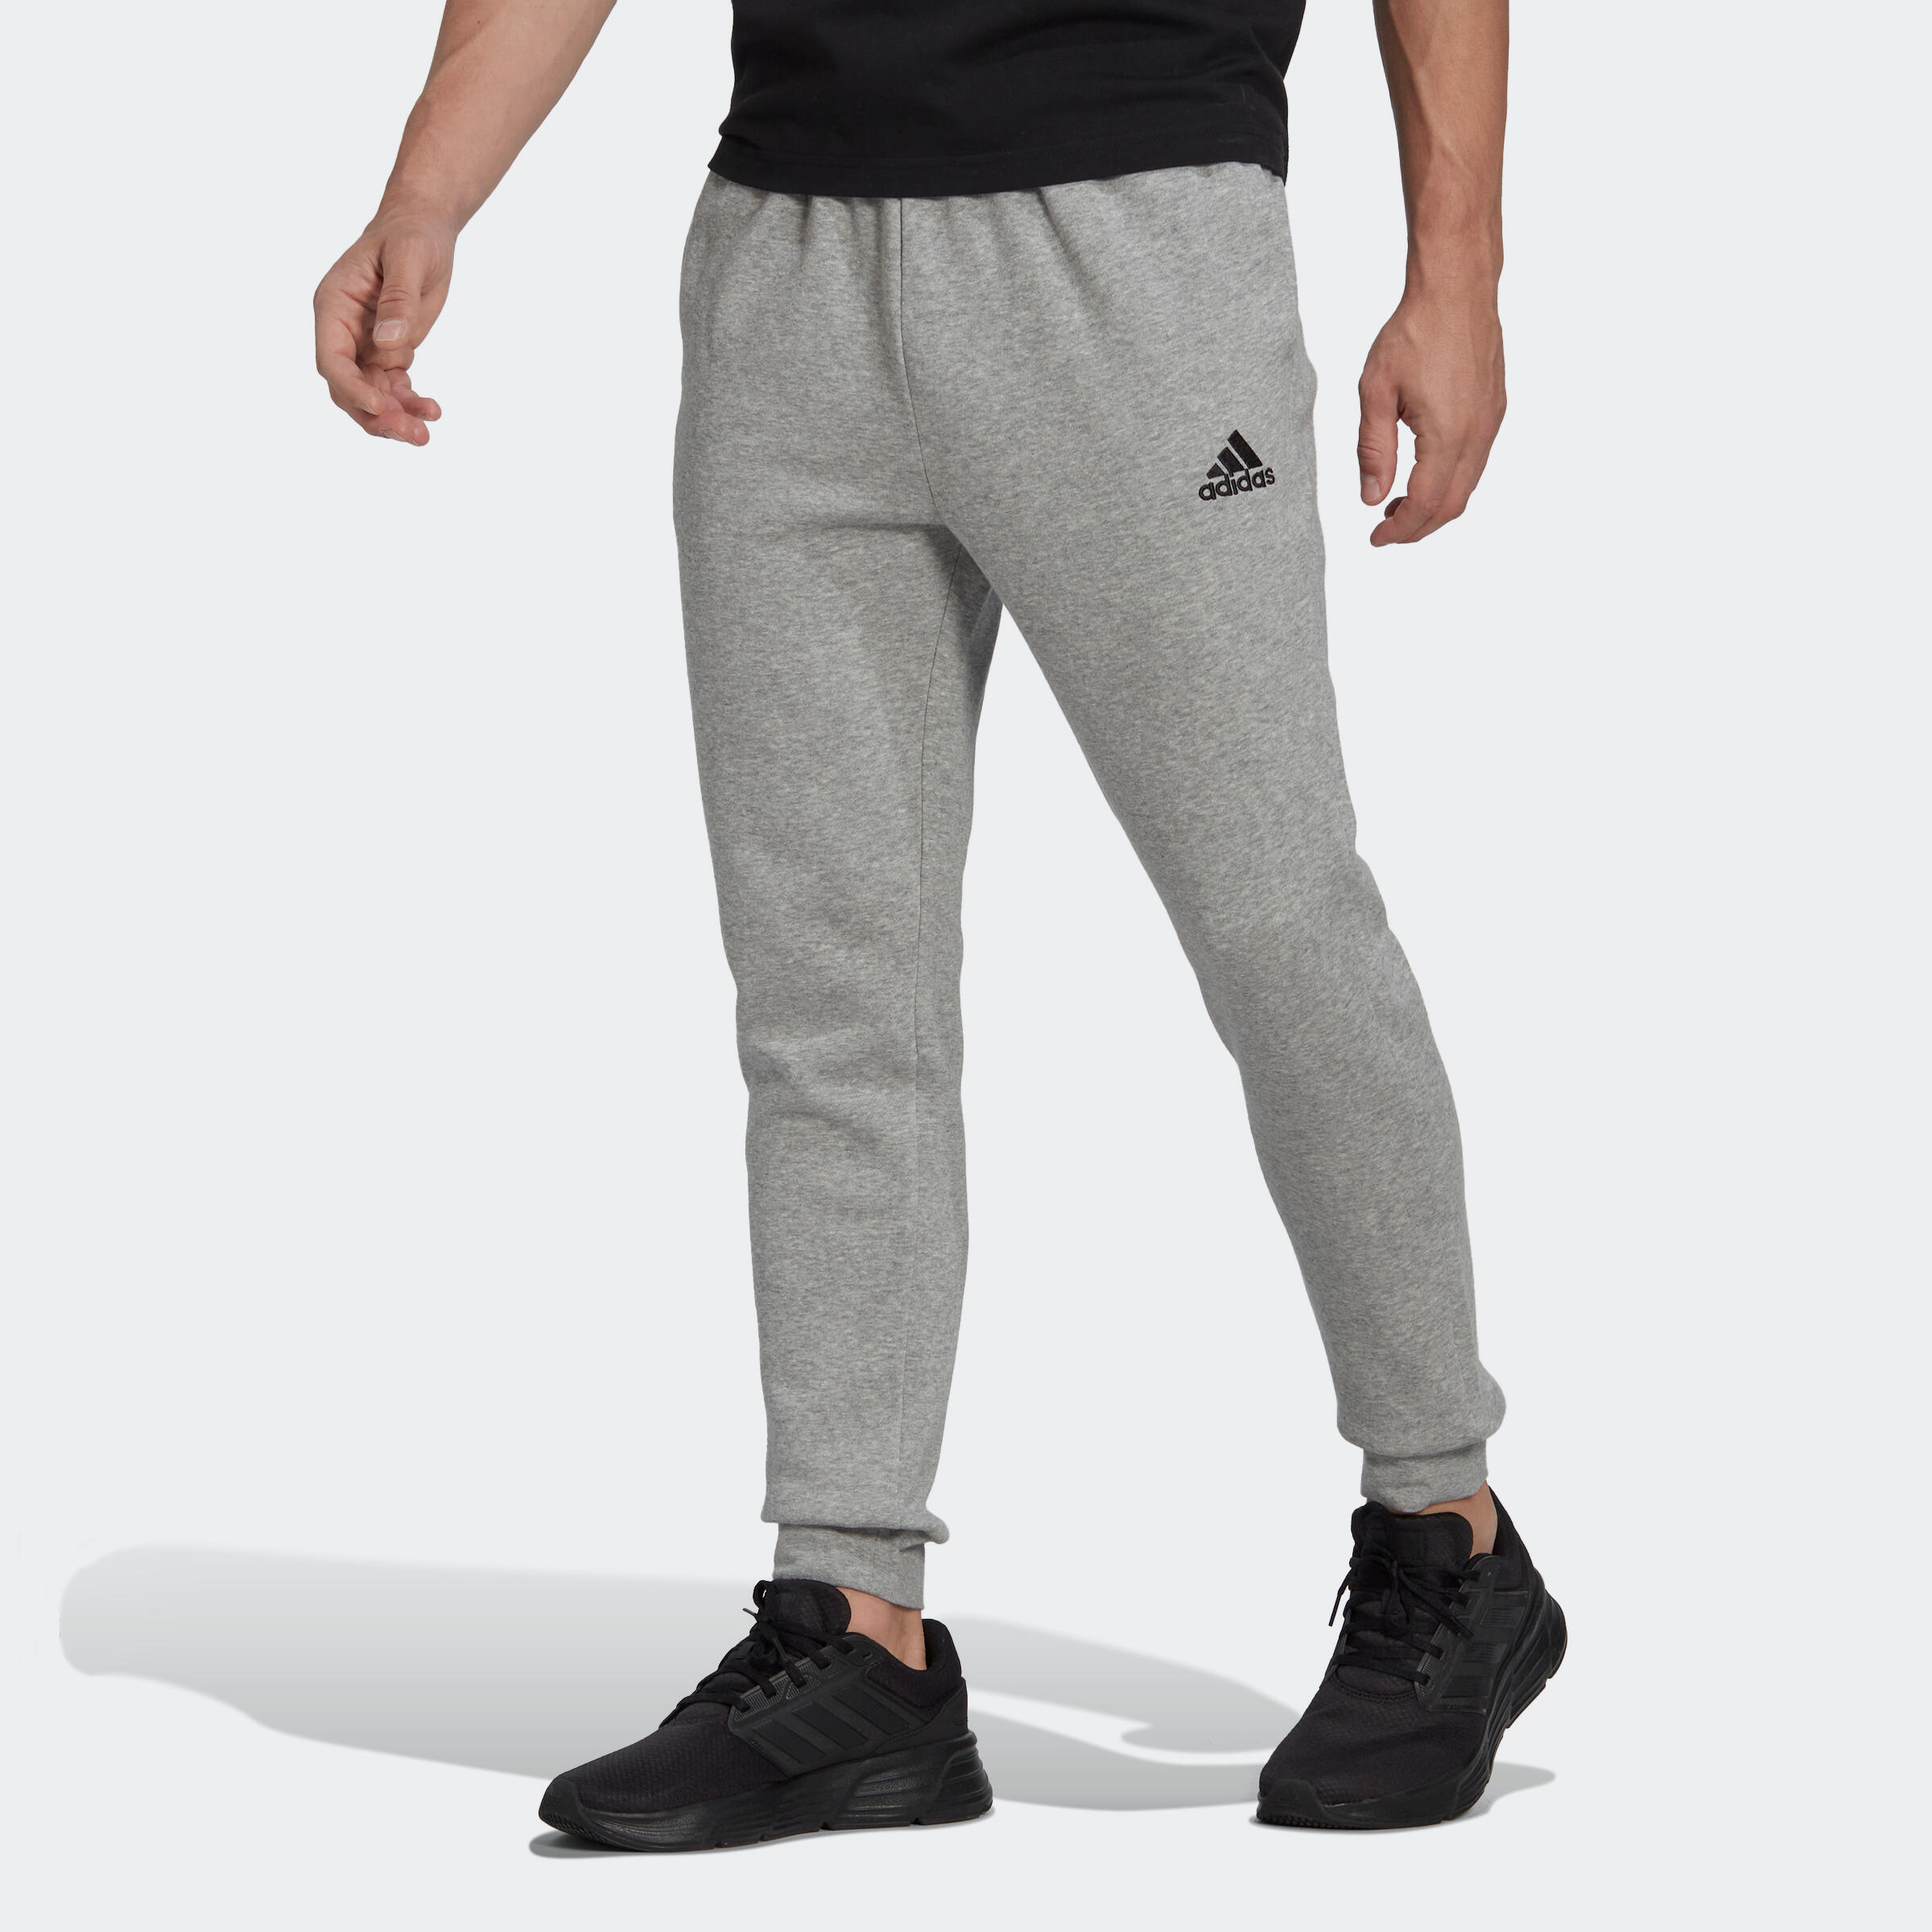 Decathlon | Pantaloni uomo fitness ADIDAS misto cotone grigi |  Adidas